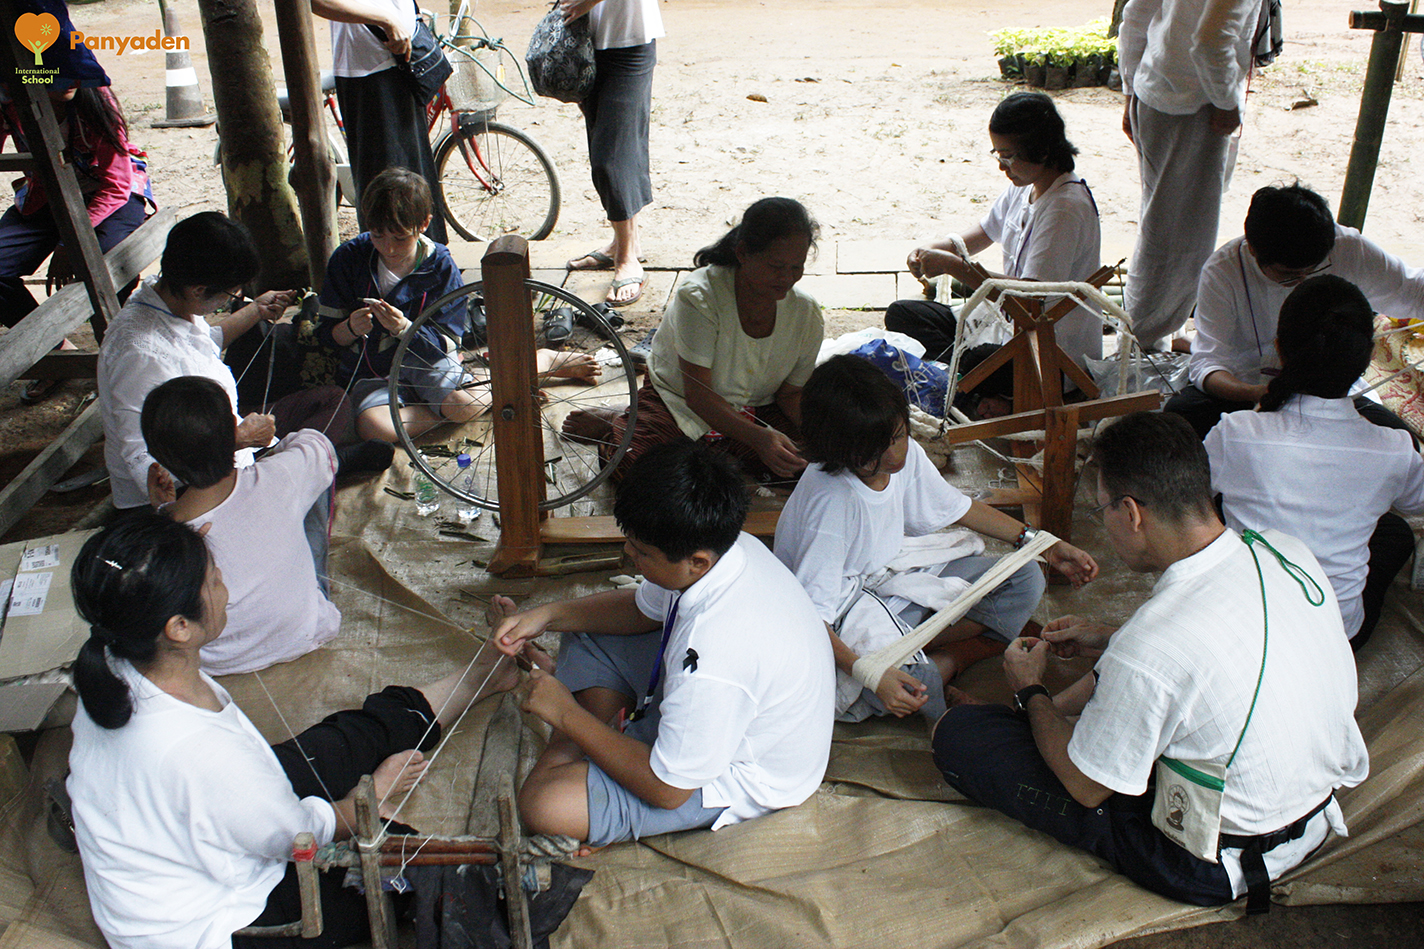 Preparing cotton threads for weaving, Panyaden at Jula Khatina in CHiang Rai